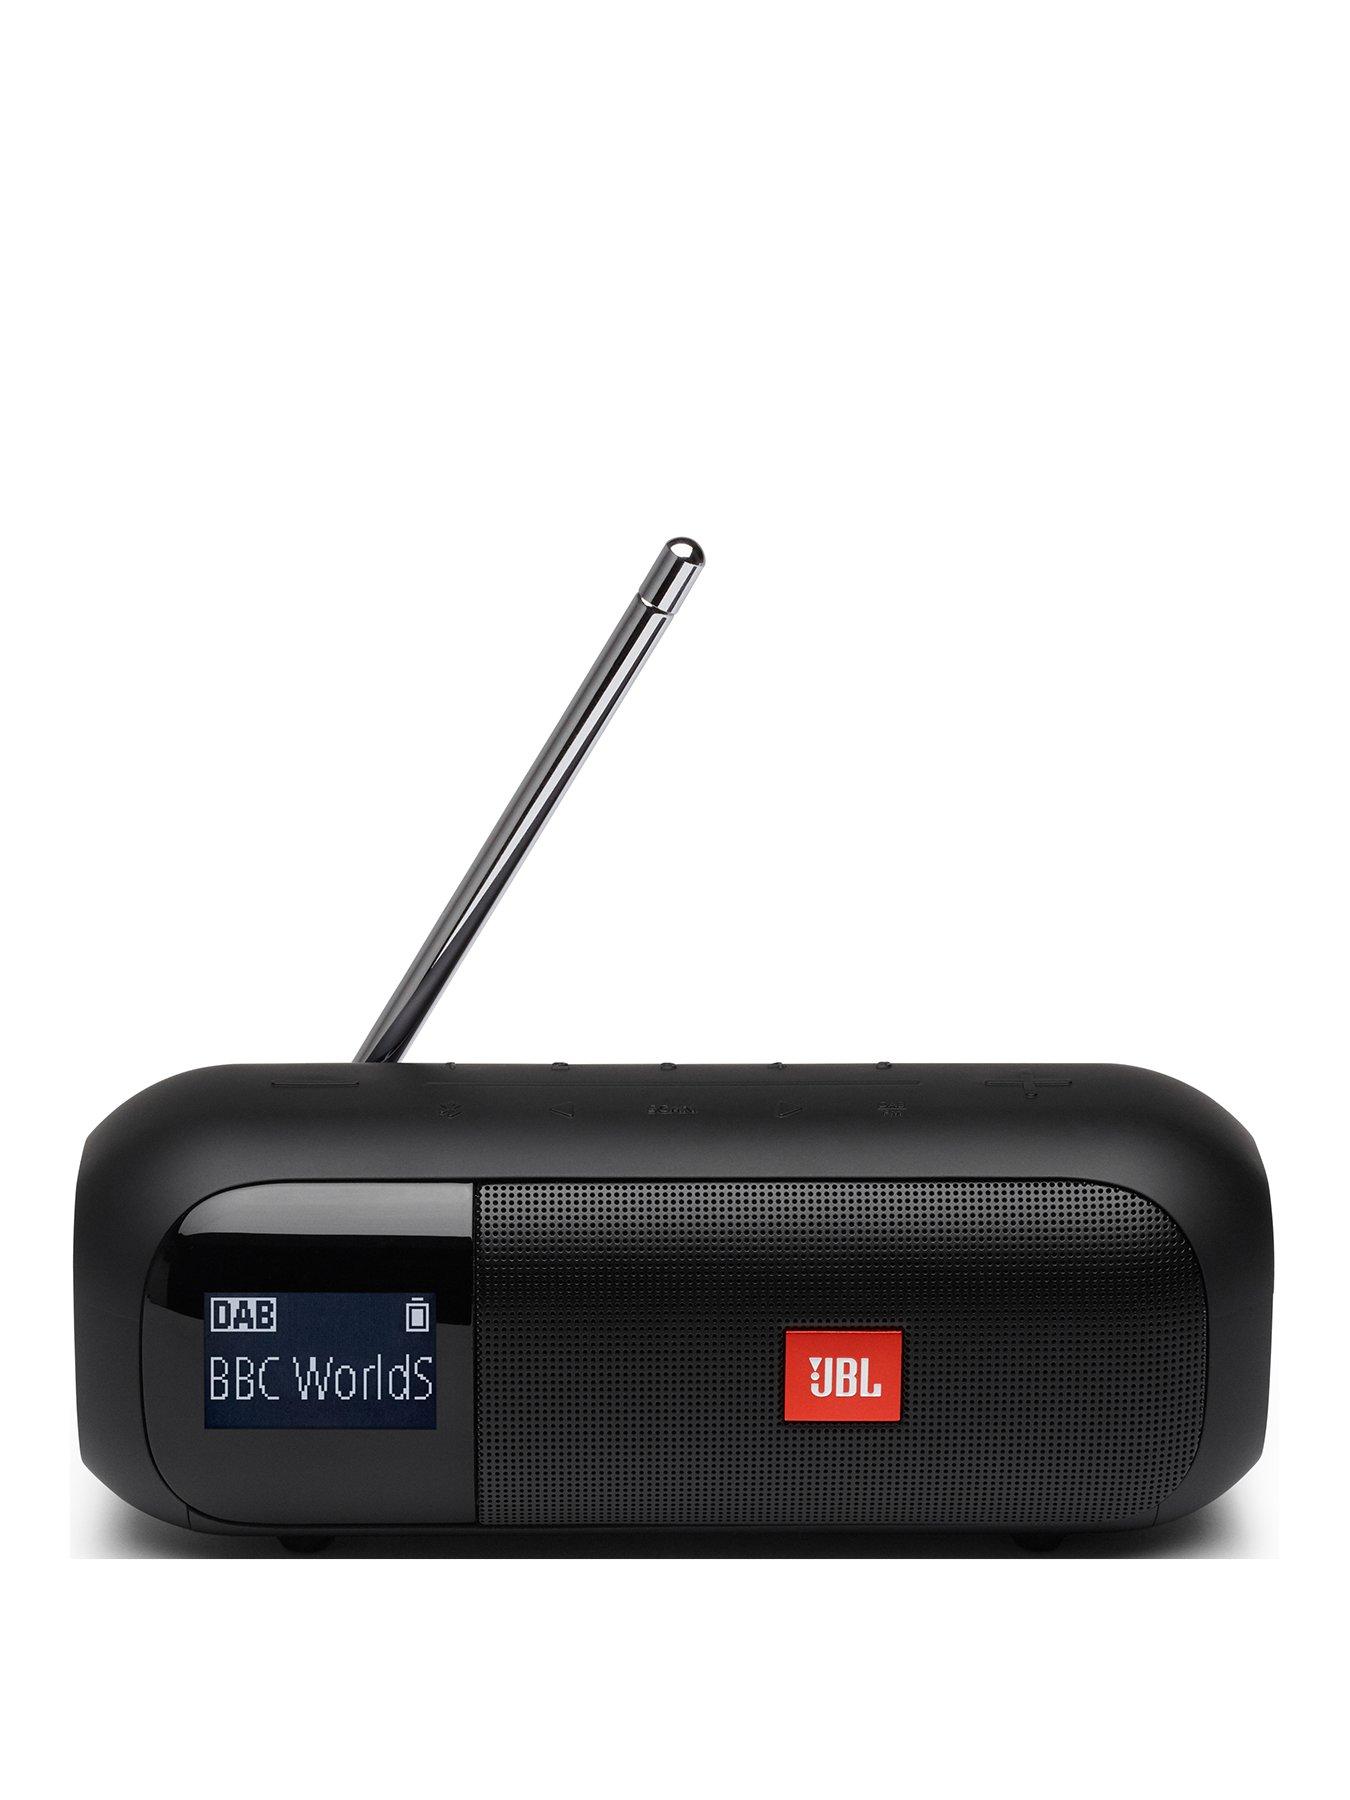 JBL TUNER 2 Portable Radio - Black Bluetooth DAB/DAB+/FM with